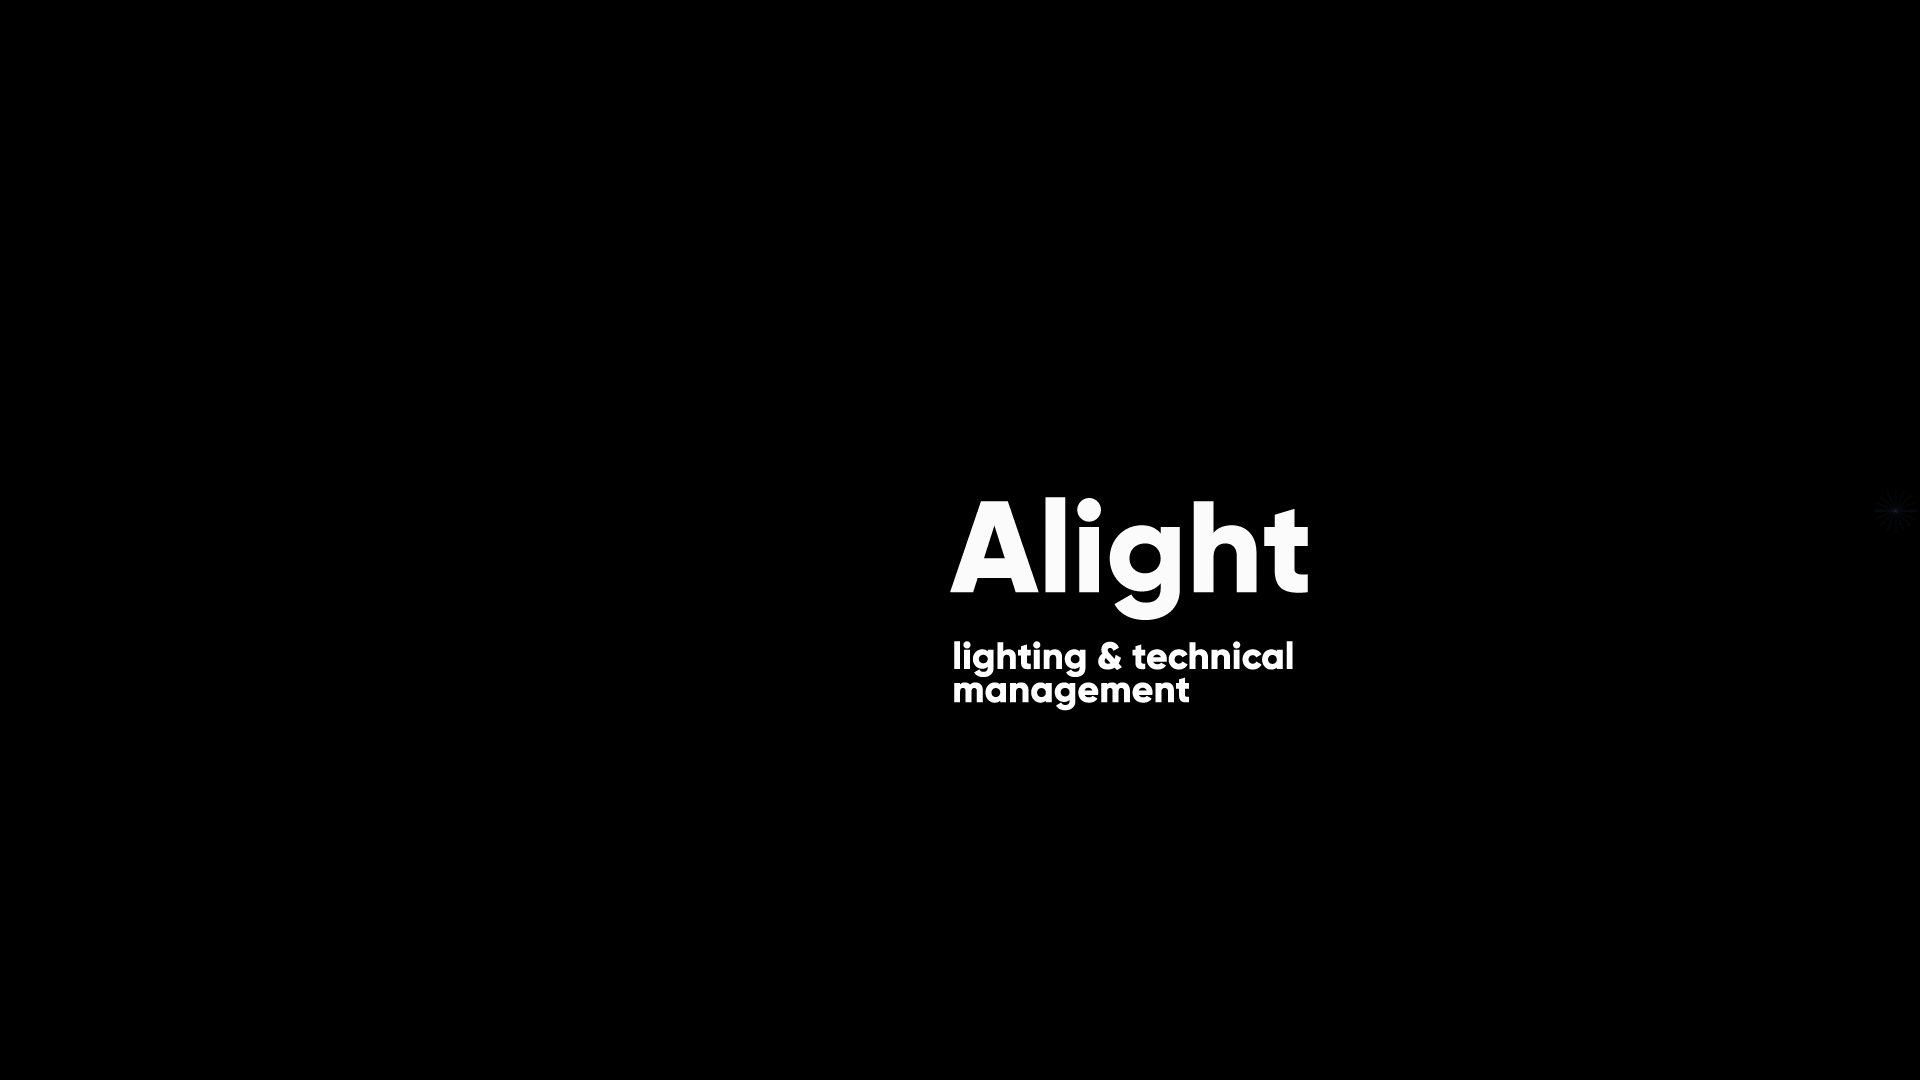 Alight照明设备管理租赁公司品牌VI设计欣赏-05